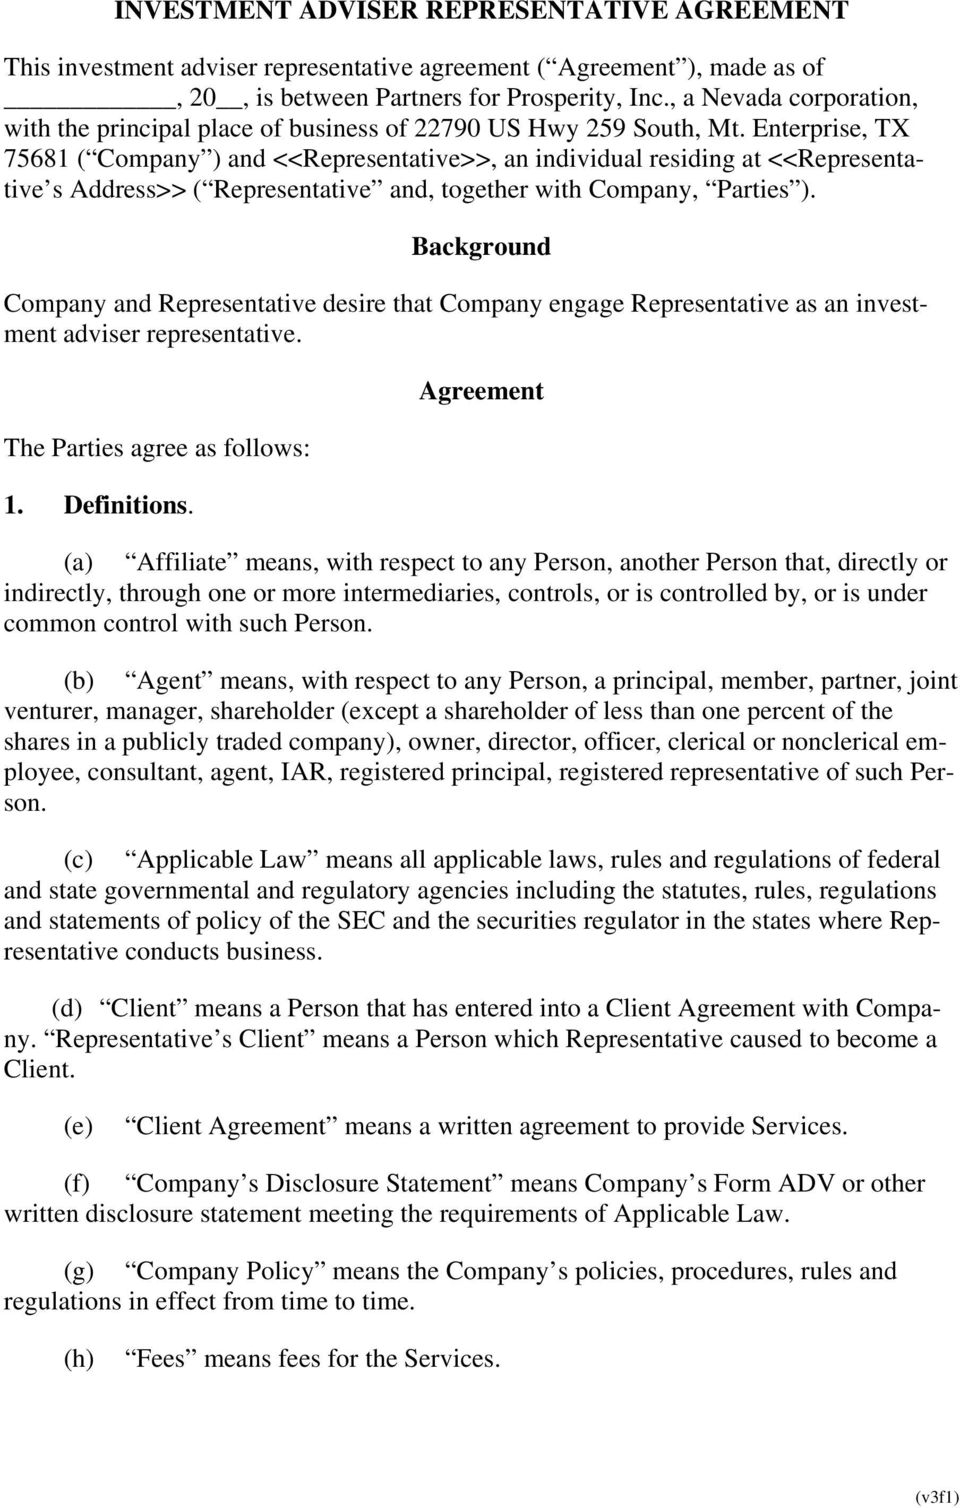 Company Representative Agreement Investment Adviser Representative Agreement Pdf